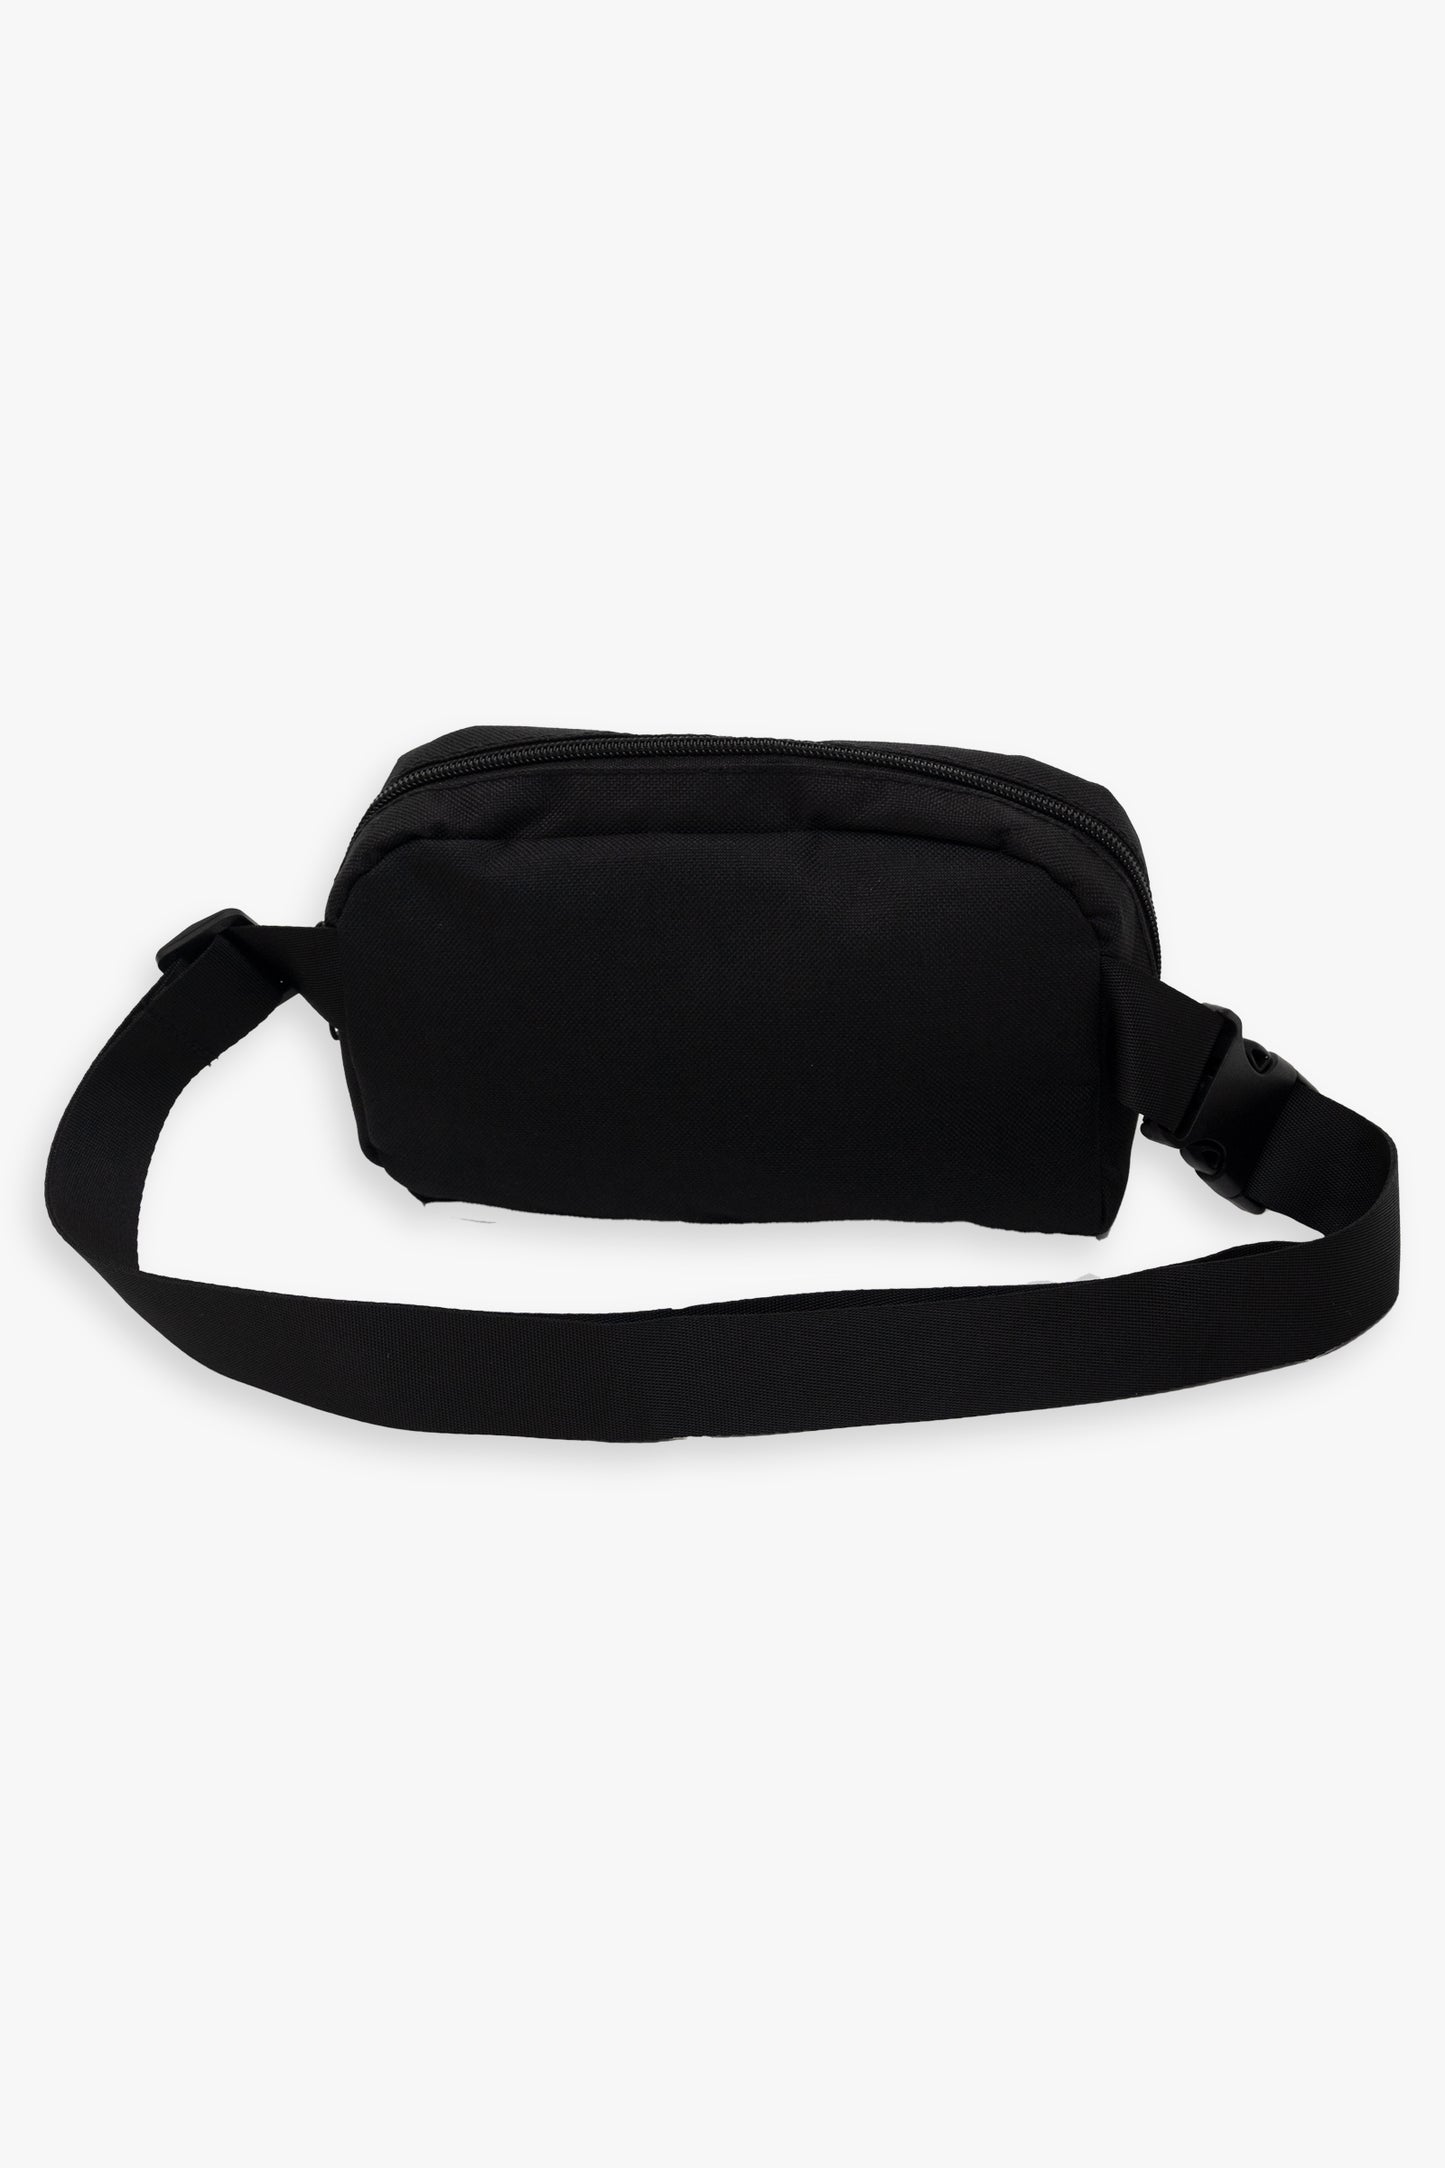 Customizable Black Belt Bag